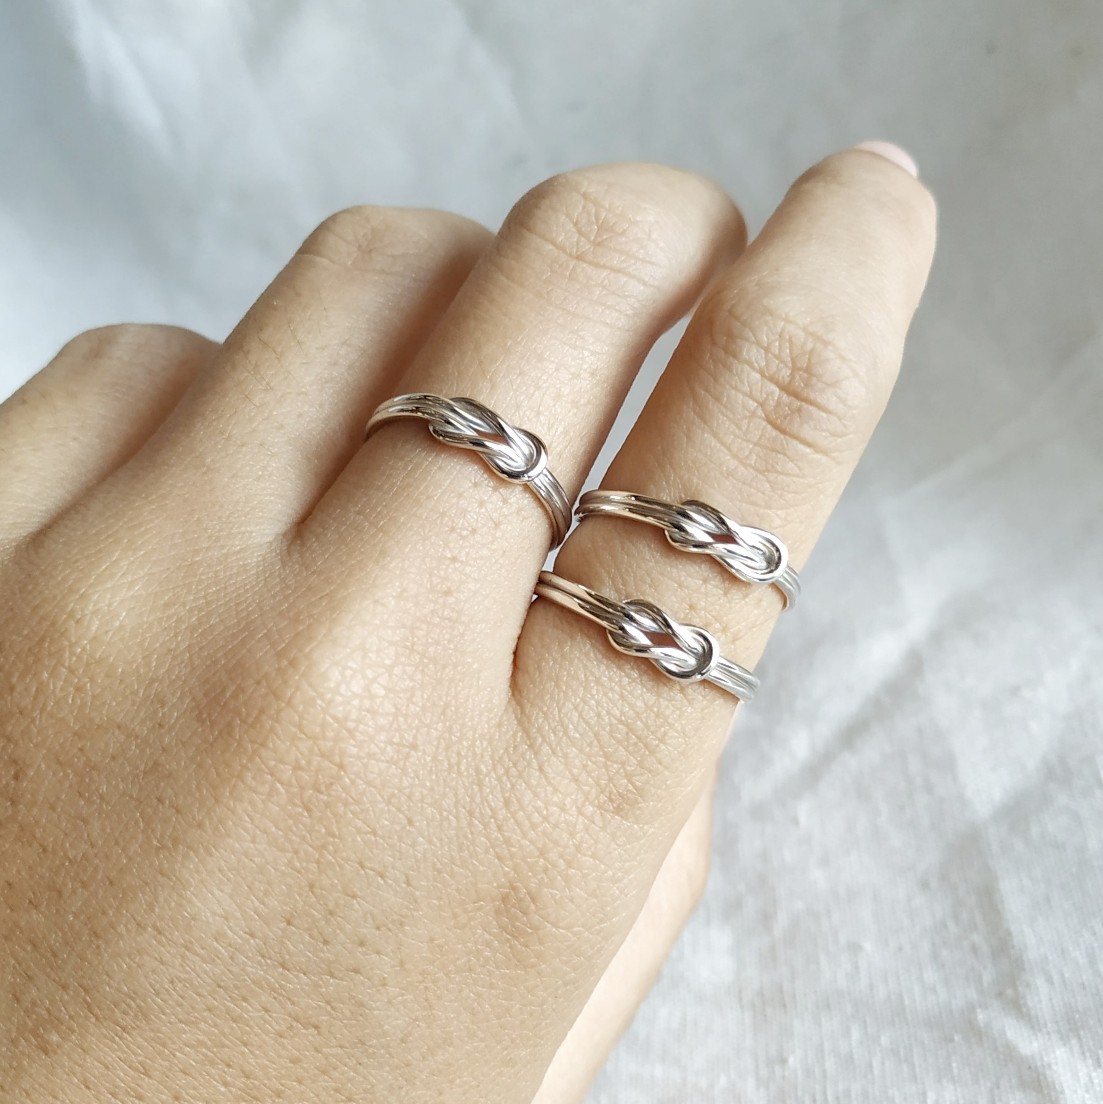 Buy Best Friend Rings 2 Rings / Hand Stamped Metal Ring / Secret Message  Online in India - Etsy